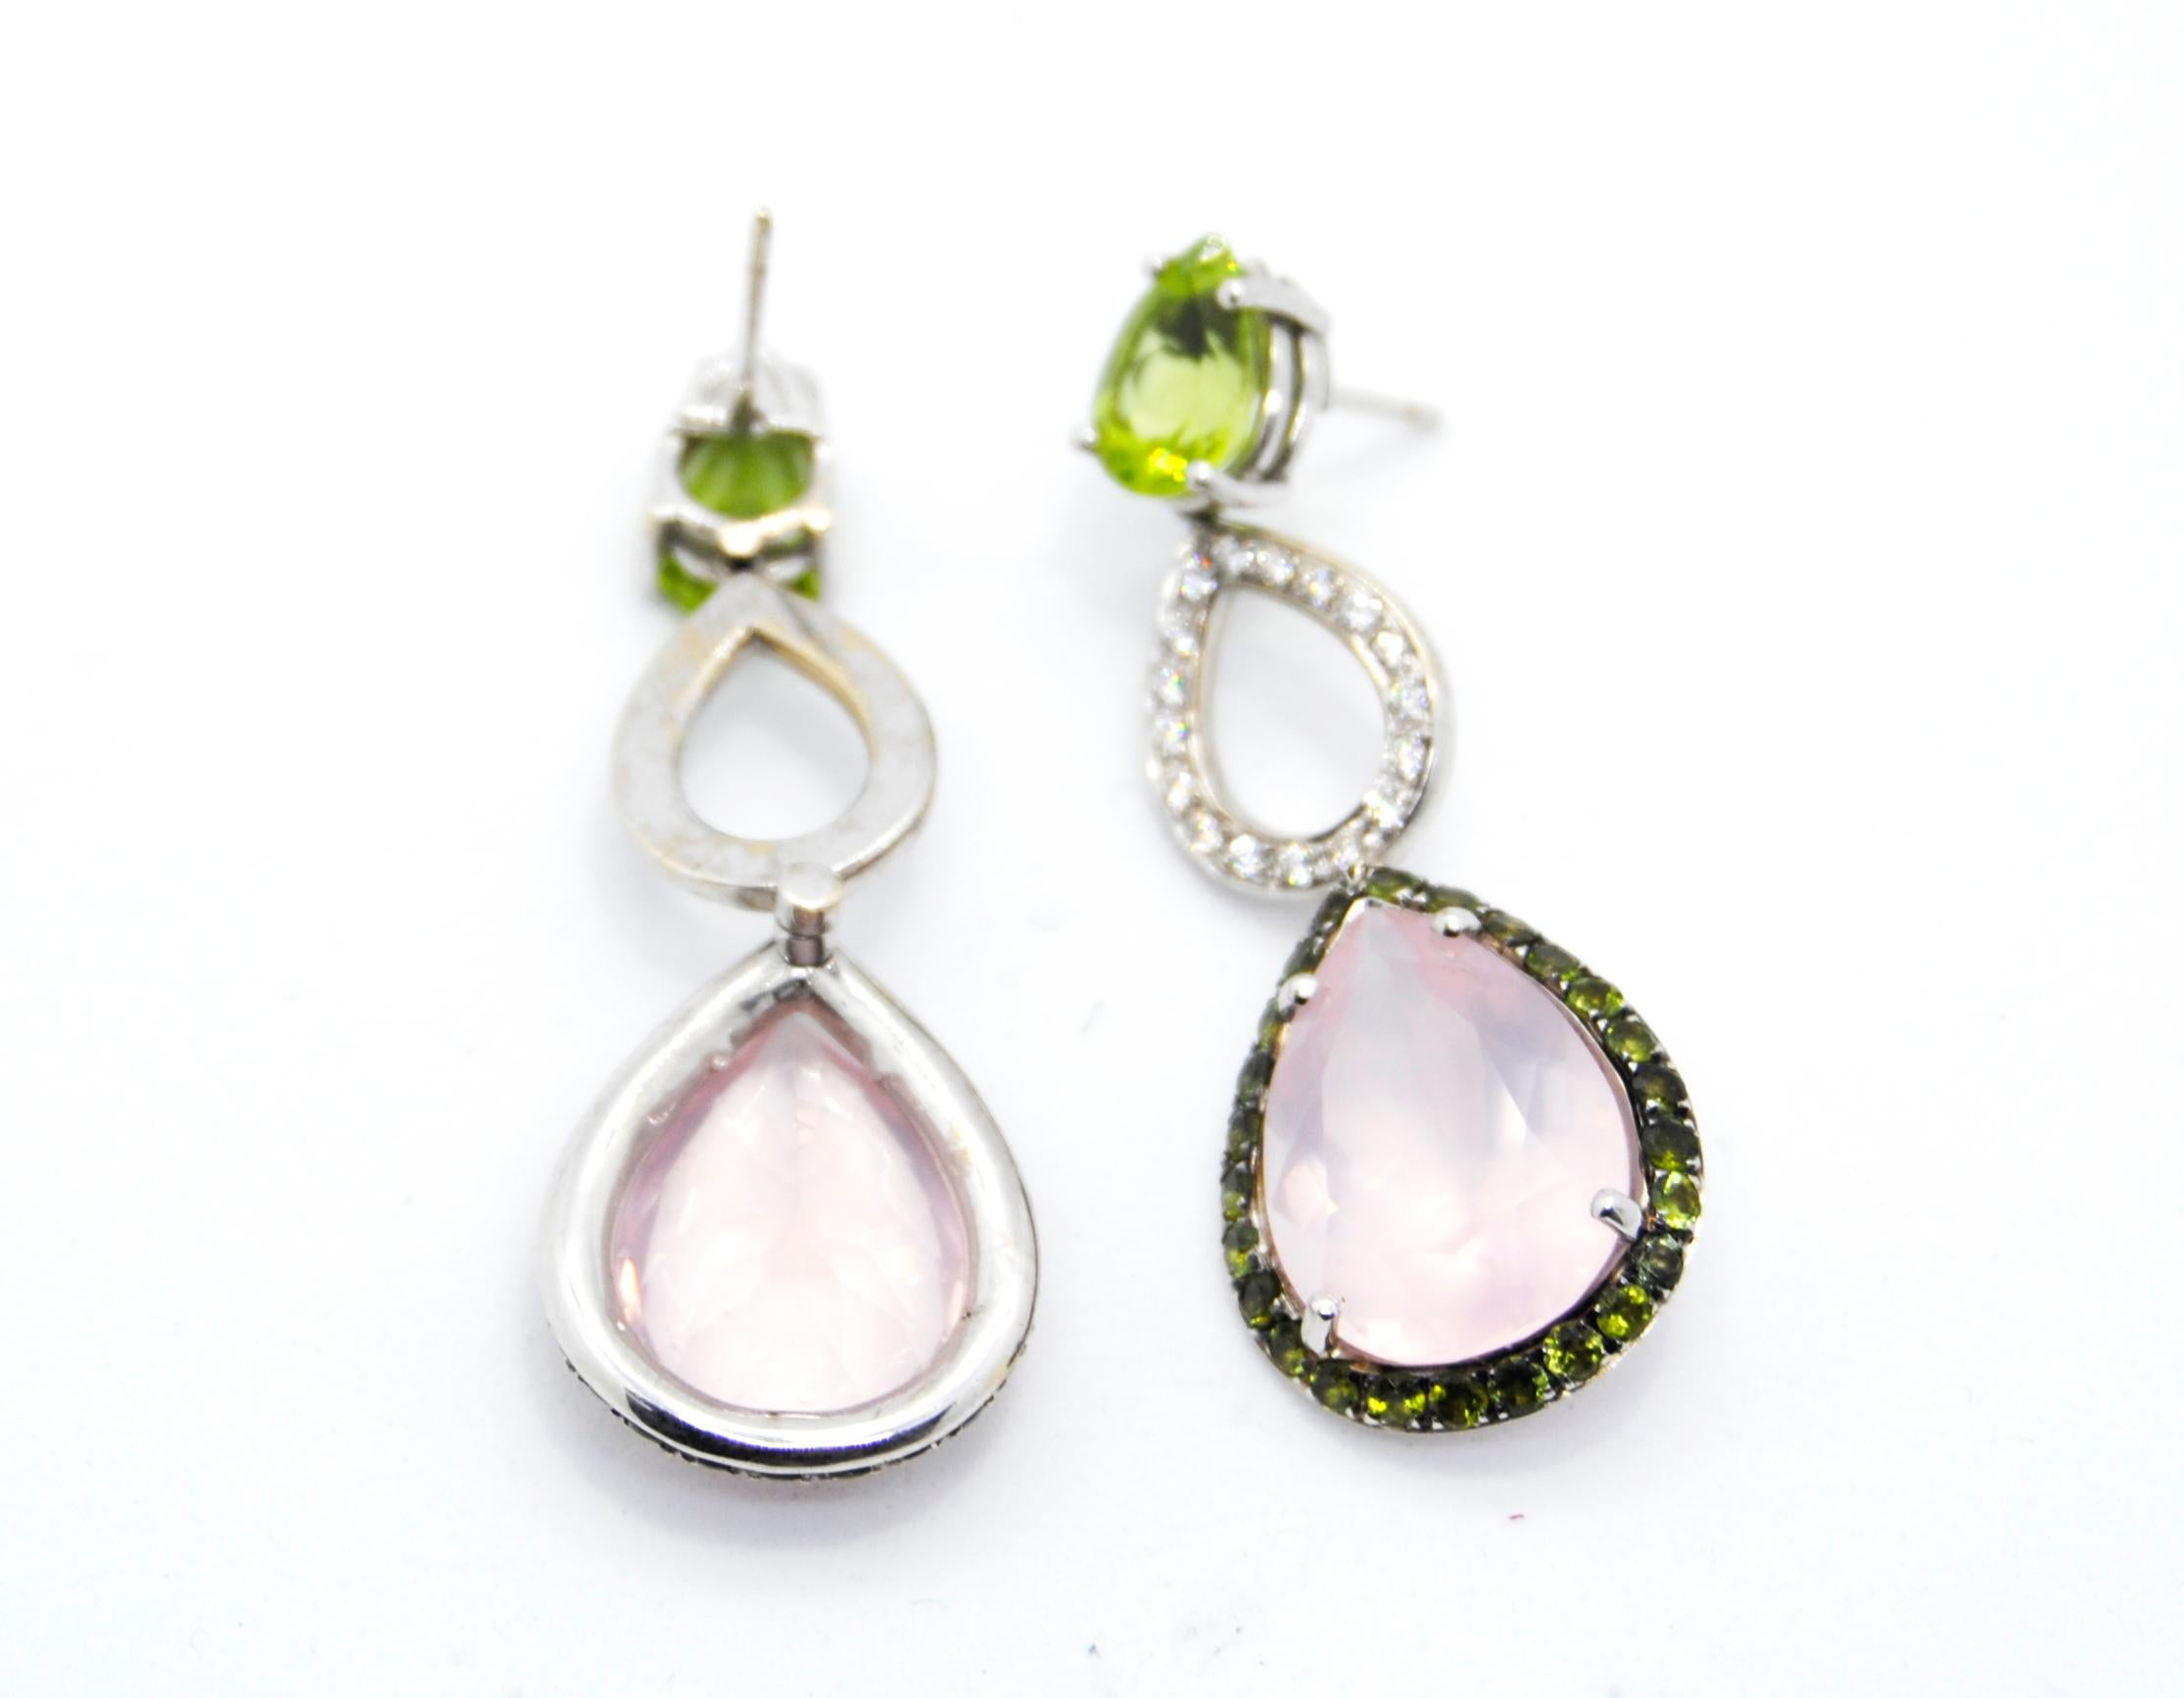 Mangiarotti 18k gold  olivine diamonds tsavorites pink quartz drop Earrings
Mangiarotti A 